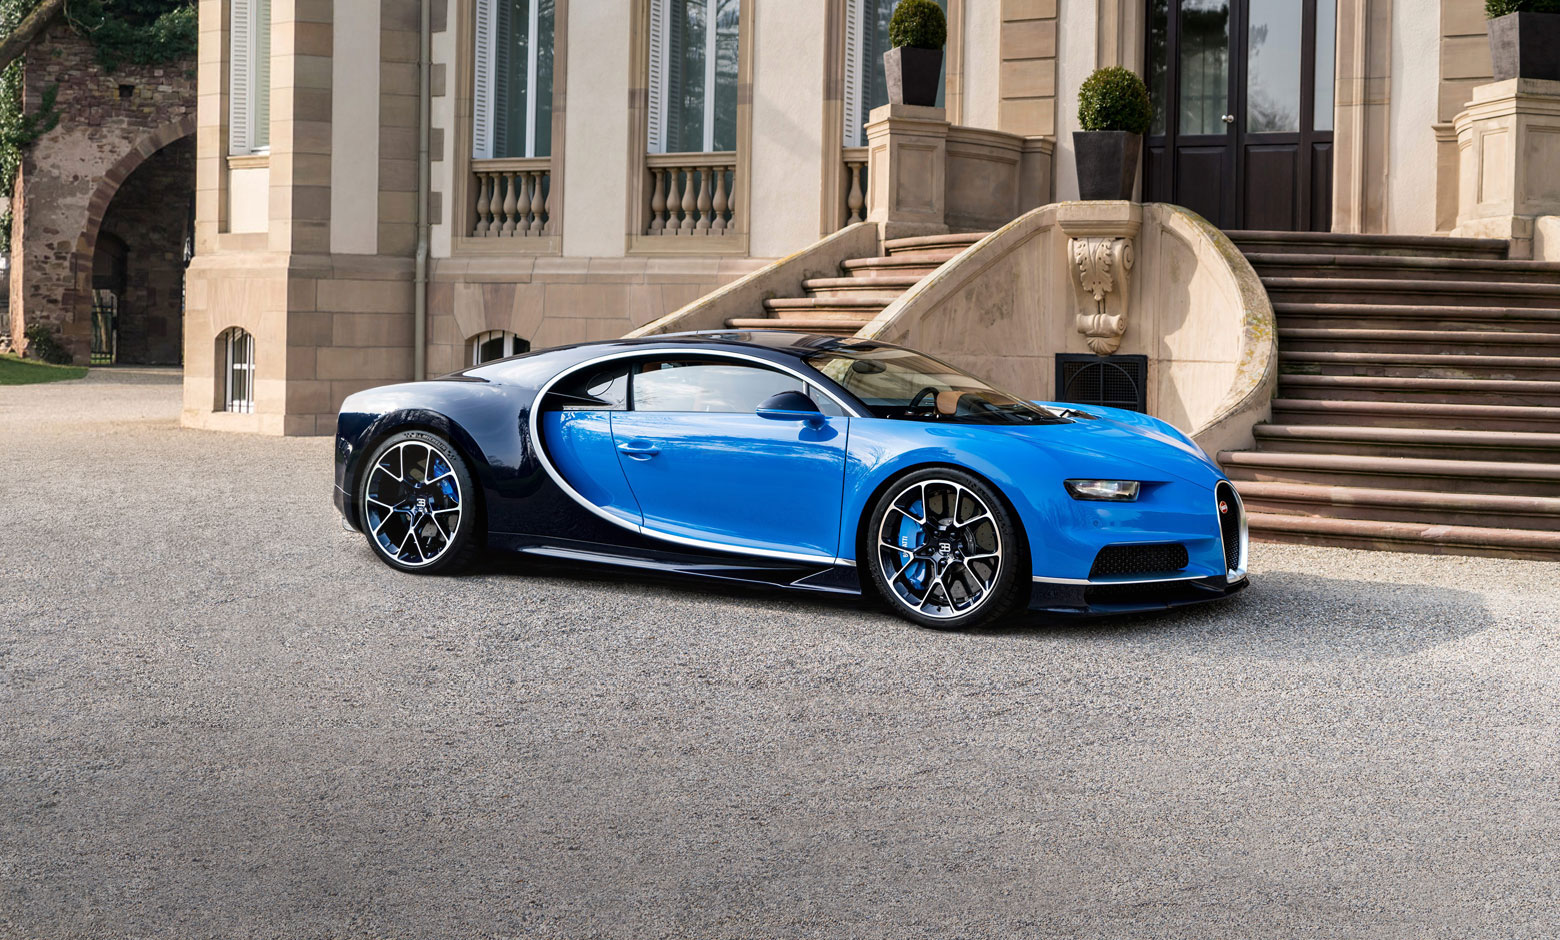 Bugatti Chiron Backgrounds on Wallpapers Vista